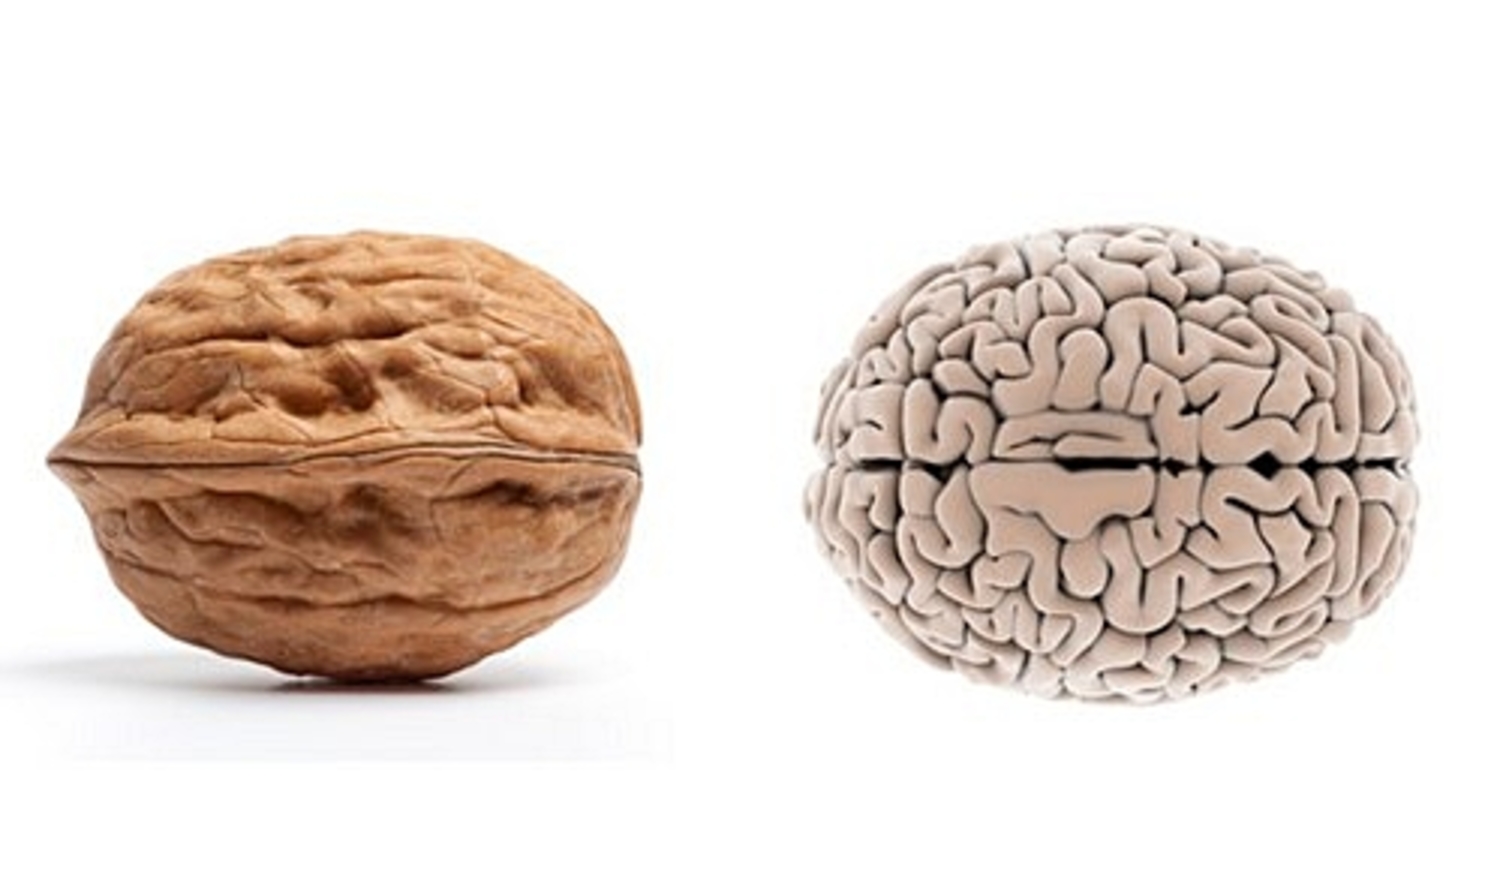 Грецкие орехи похожи на мозги. Грецкий орех и мозг. Орех грецкий. Орех похожий на мозг. Грецкий орех похож на мозг.